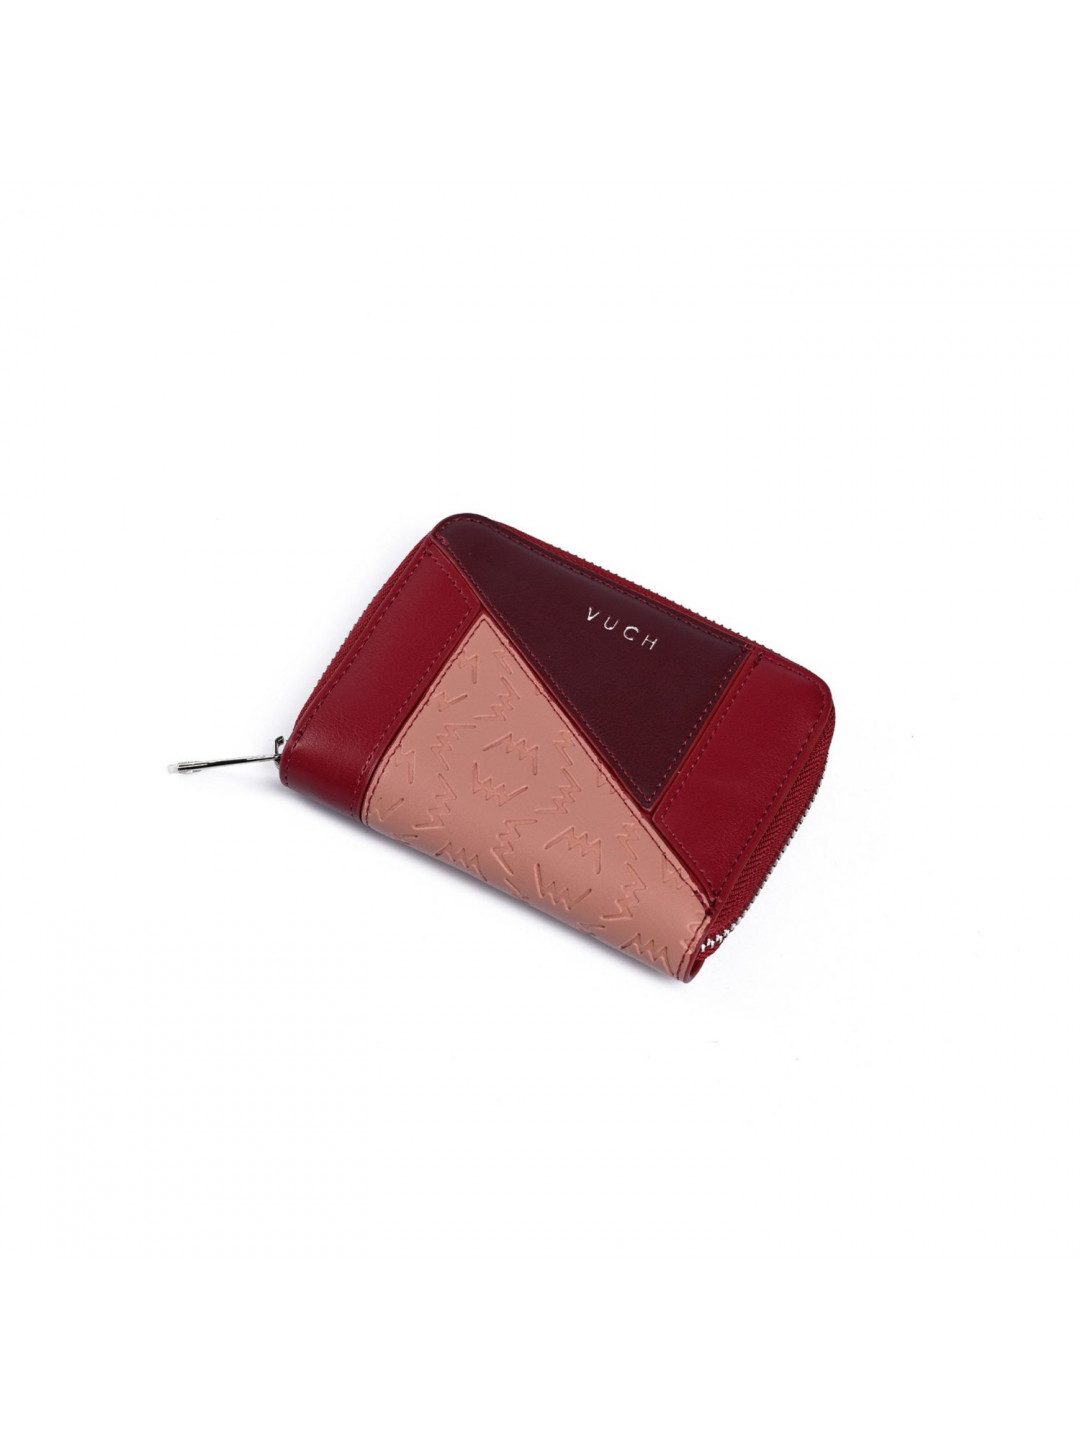 Trendová dámská koženková peněženka VUCH Marico červená